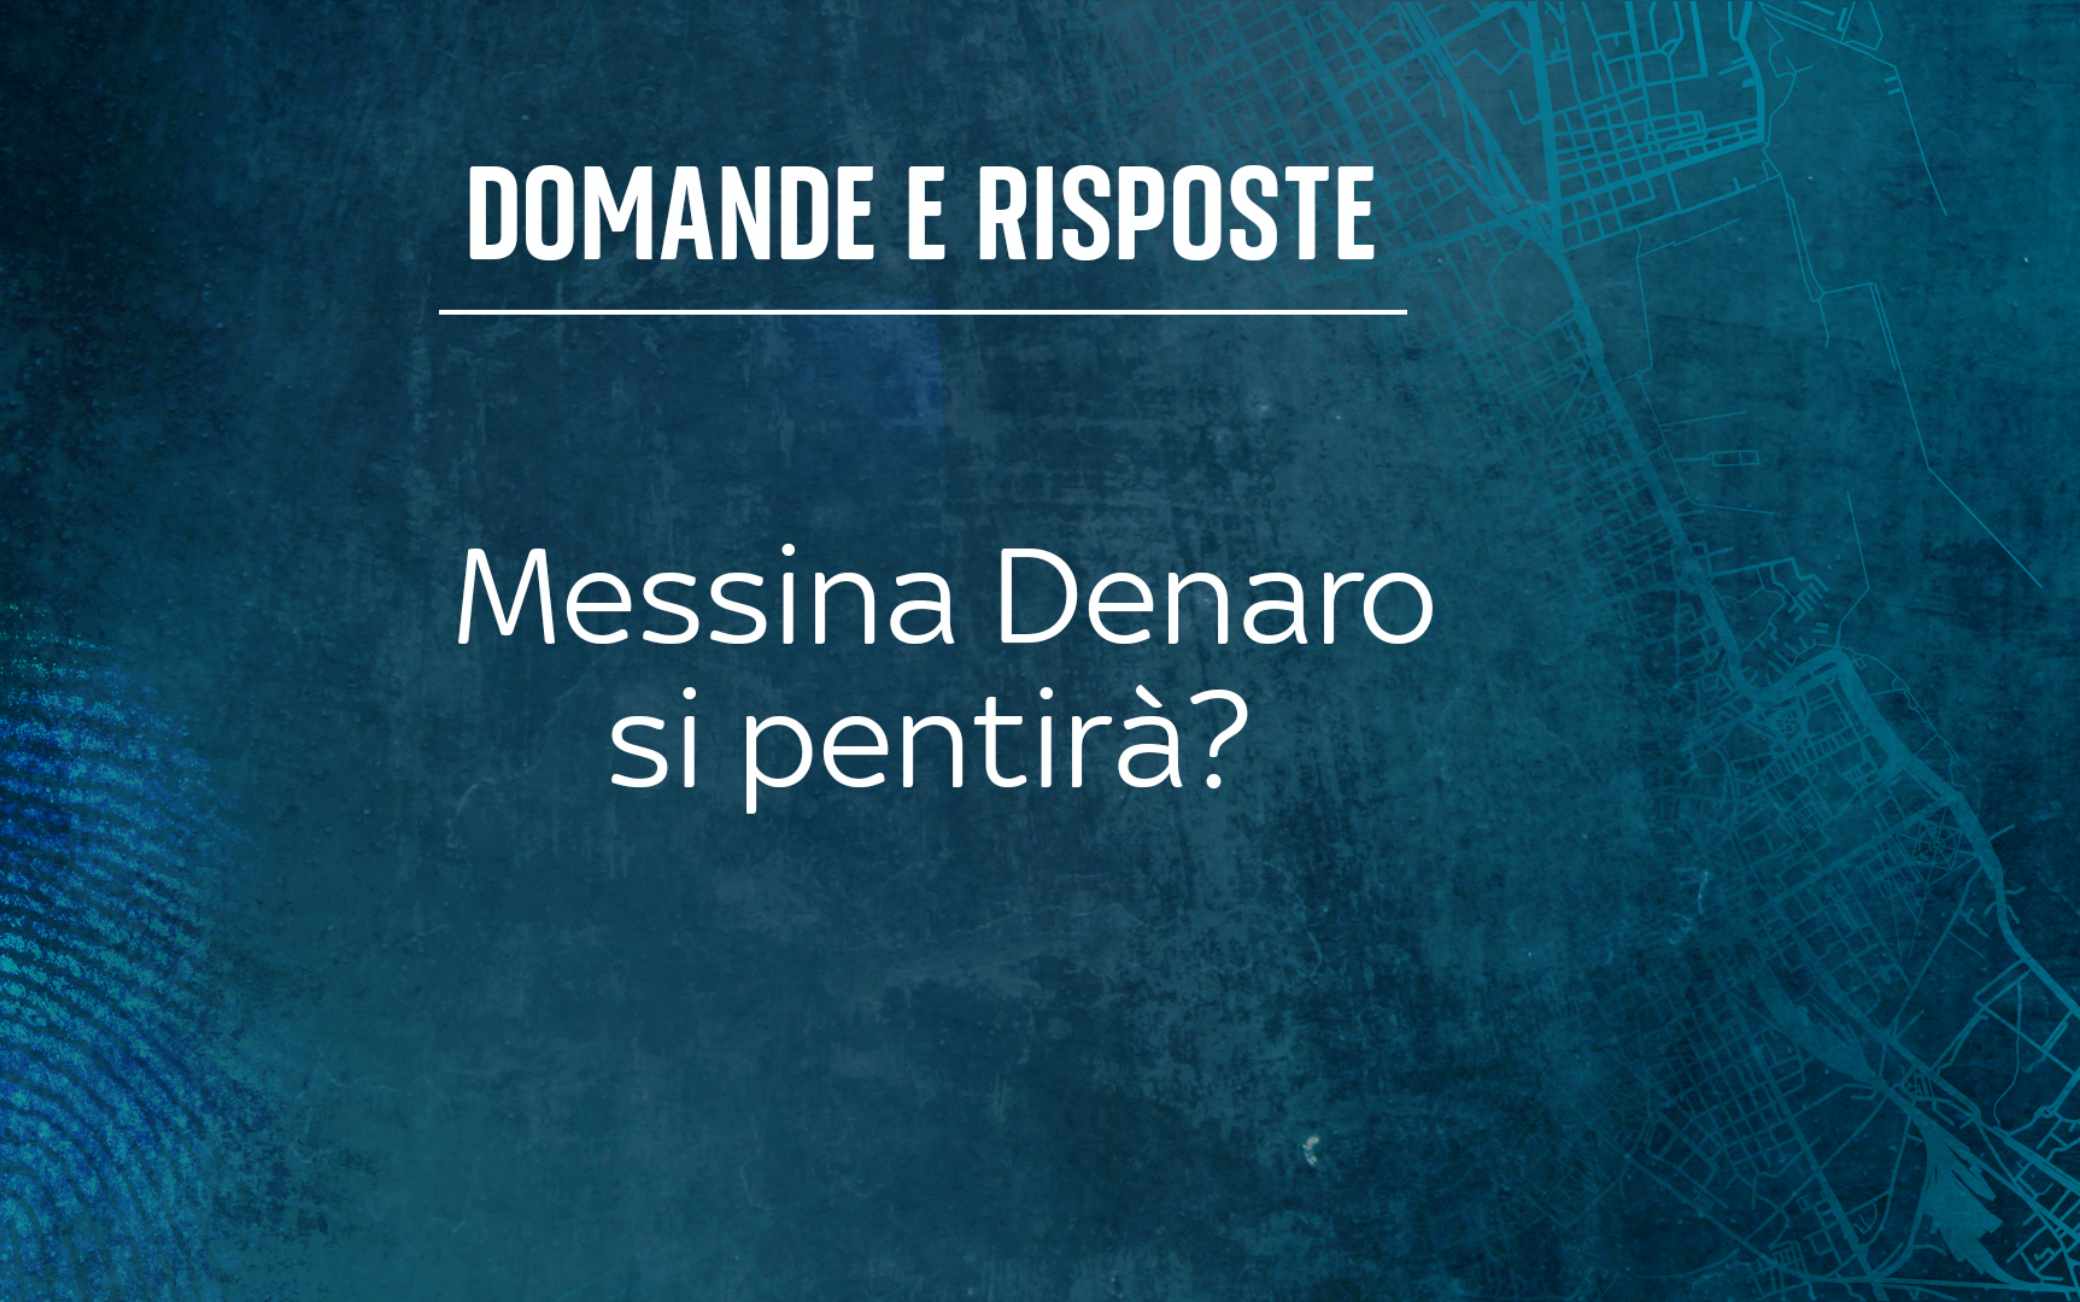 Matteo Messina Denaro si pentirà?